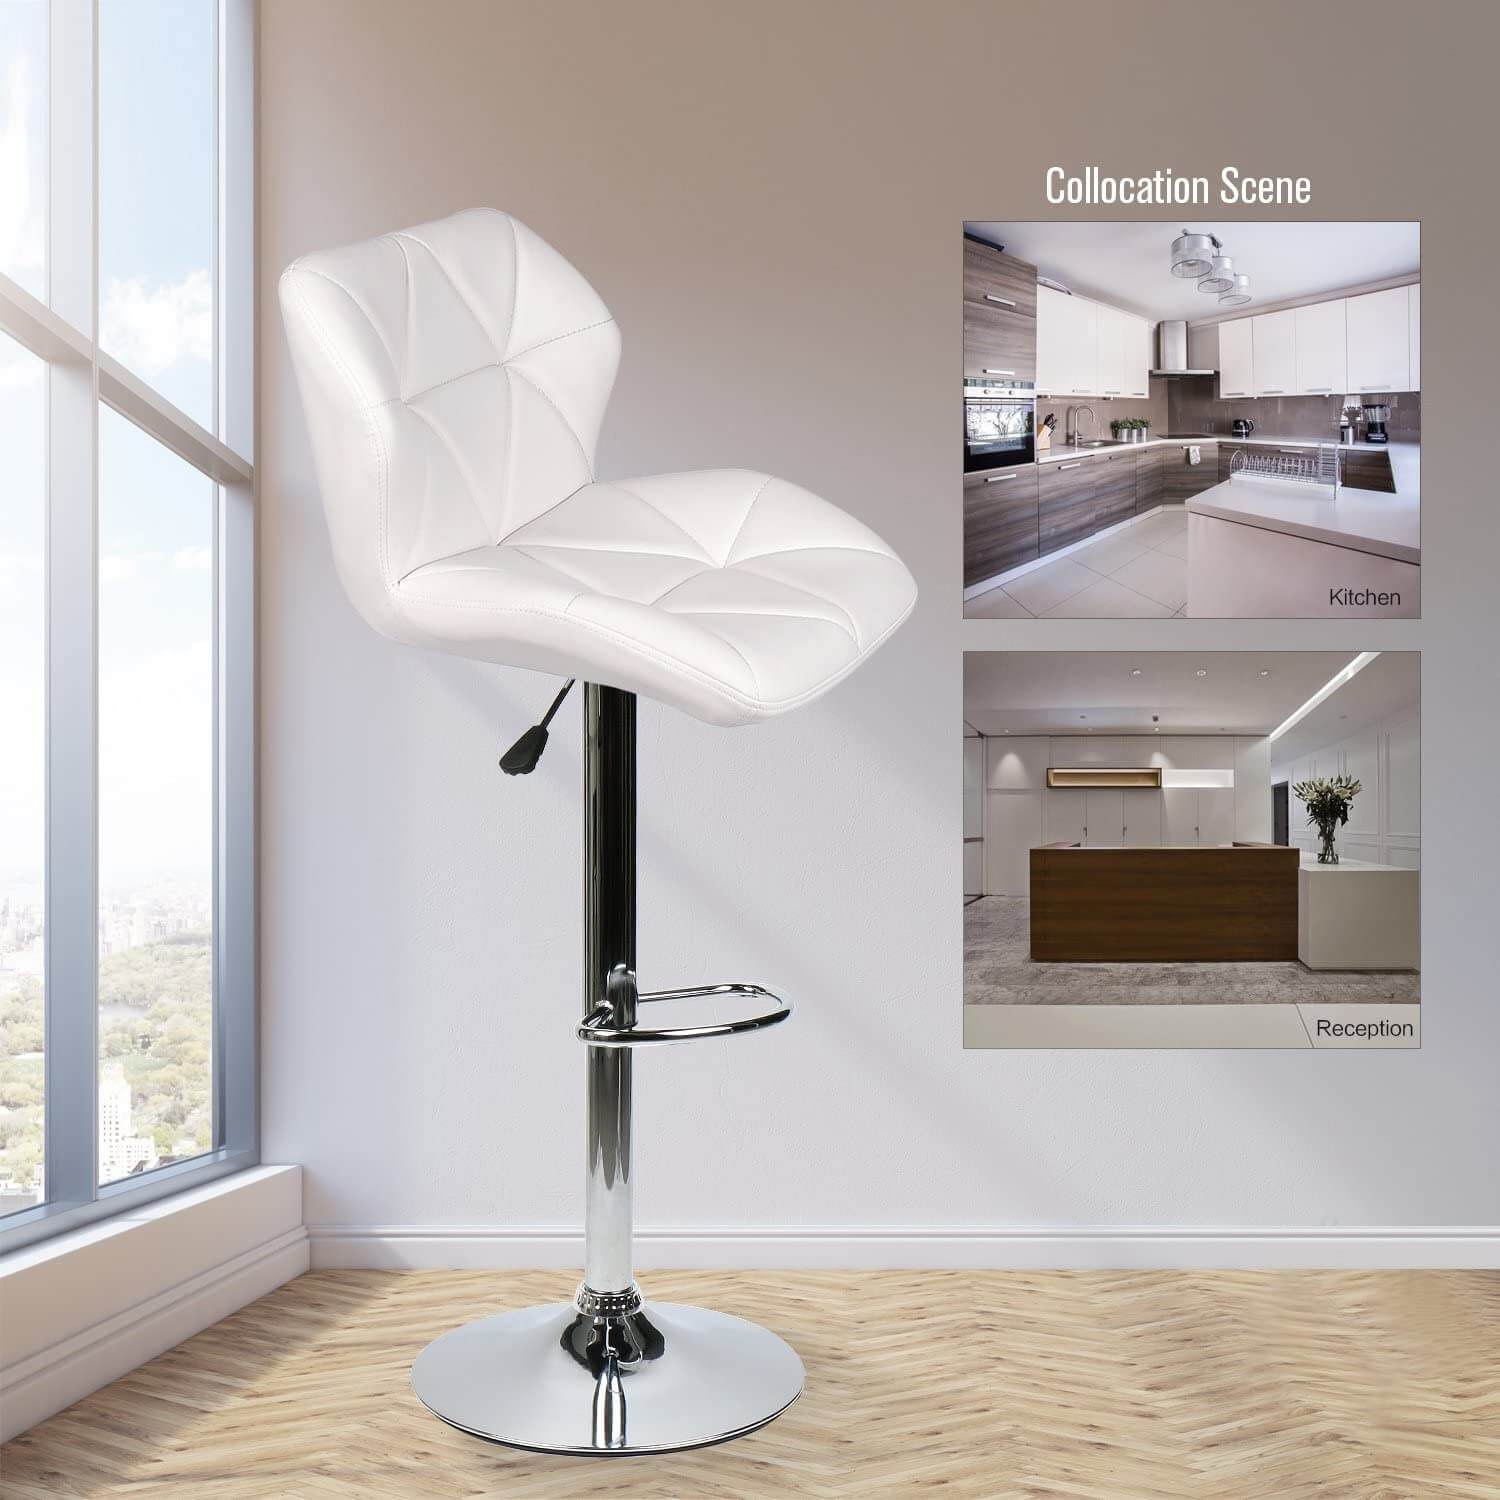 Elecwish white bar stool OW001 display scene